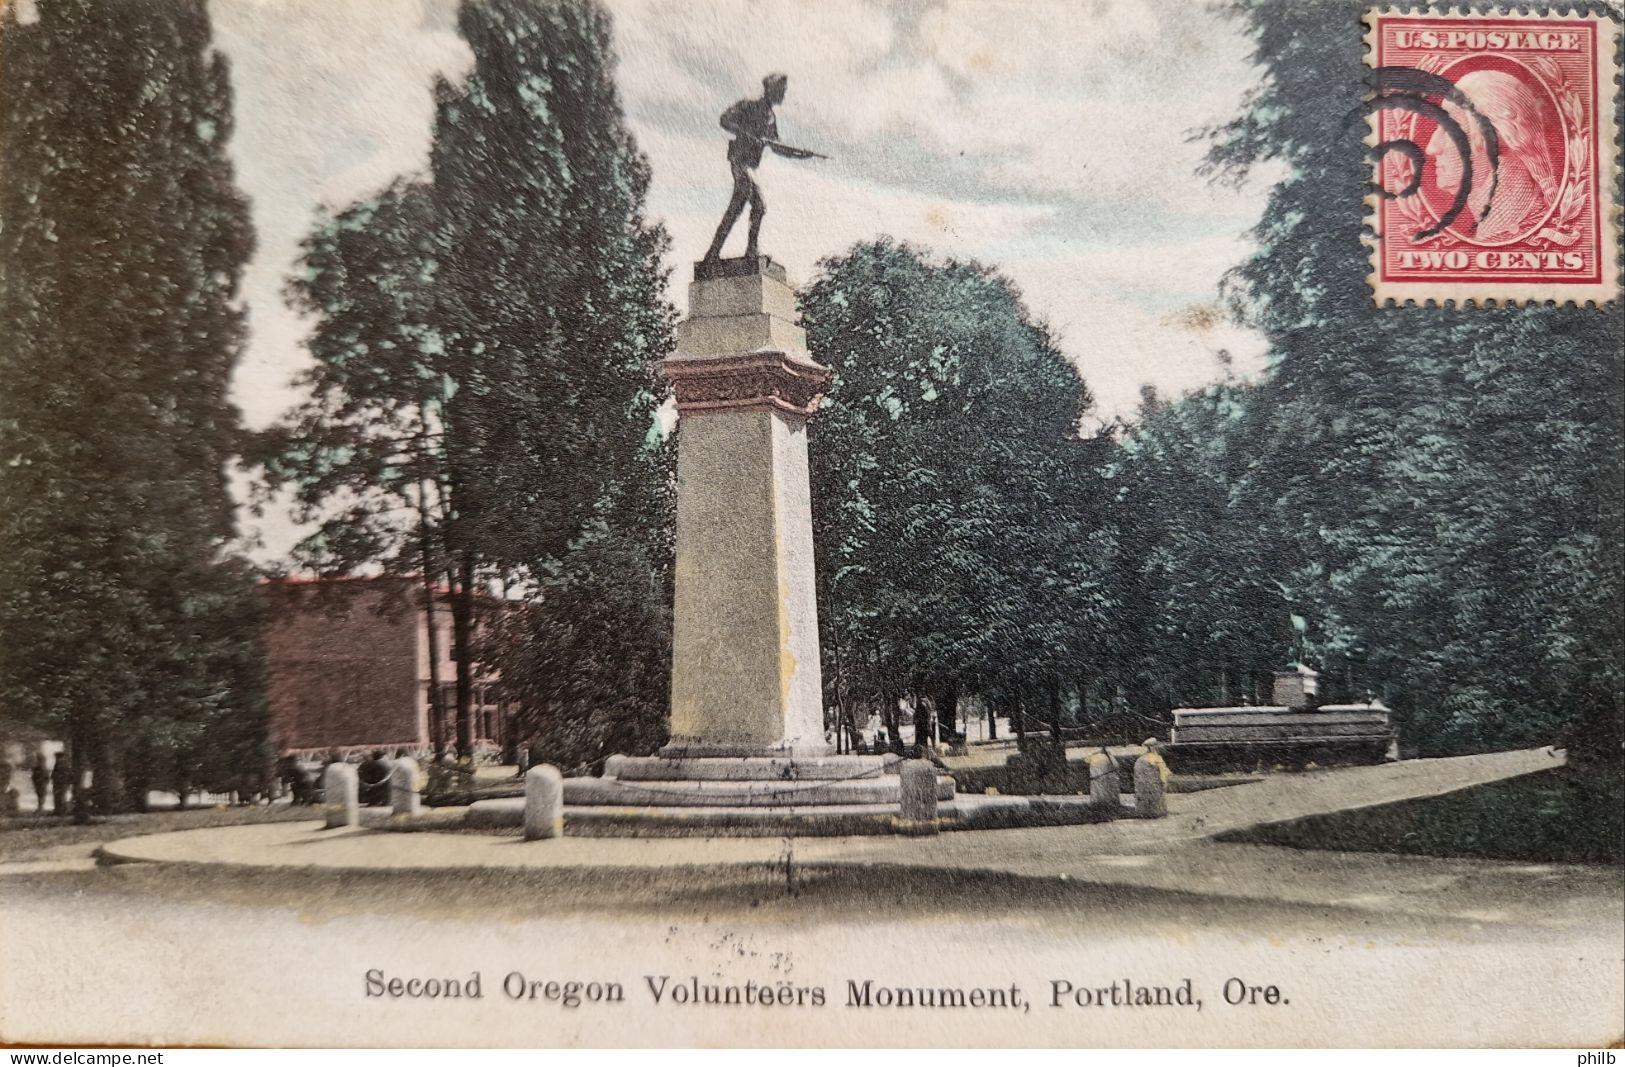 PORTLAND, ORE. - Second Oregon Volunteers Monument / Spanish–American War Soldier's Monument - Portland